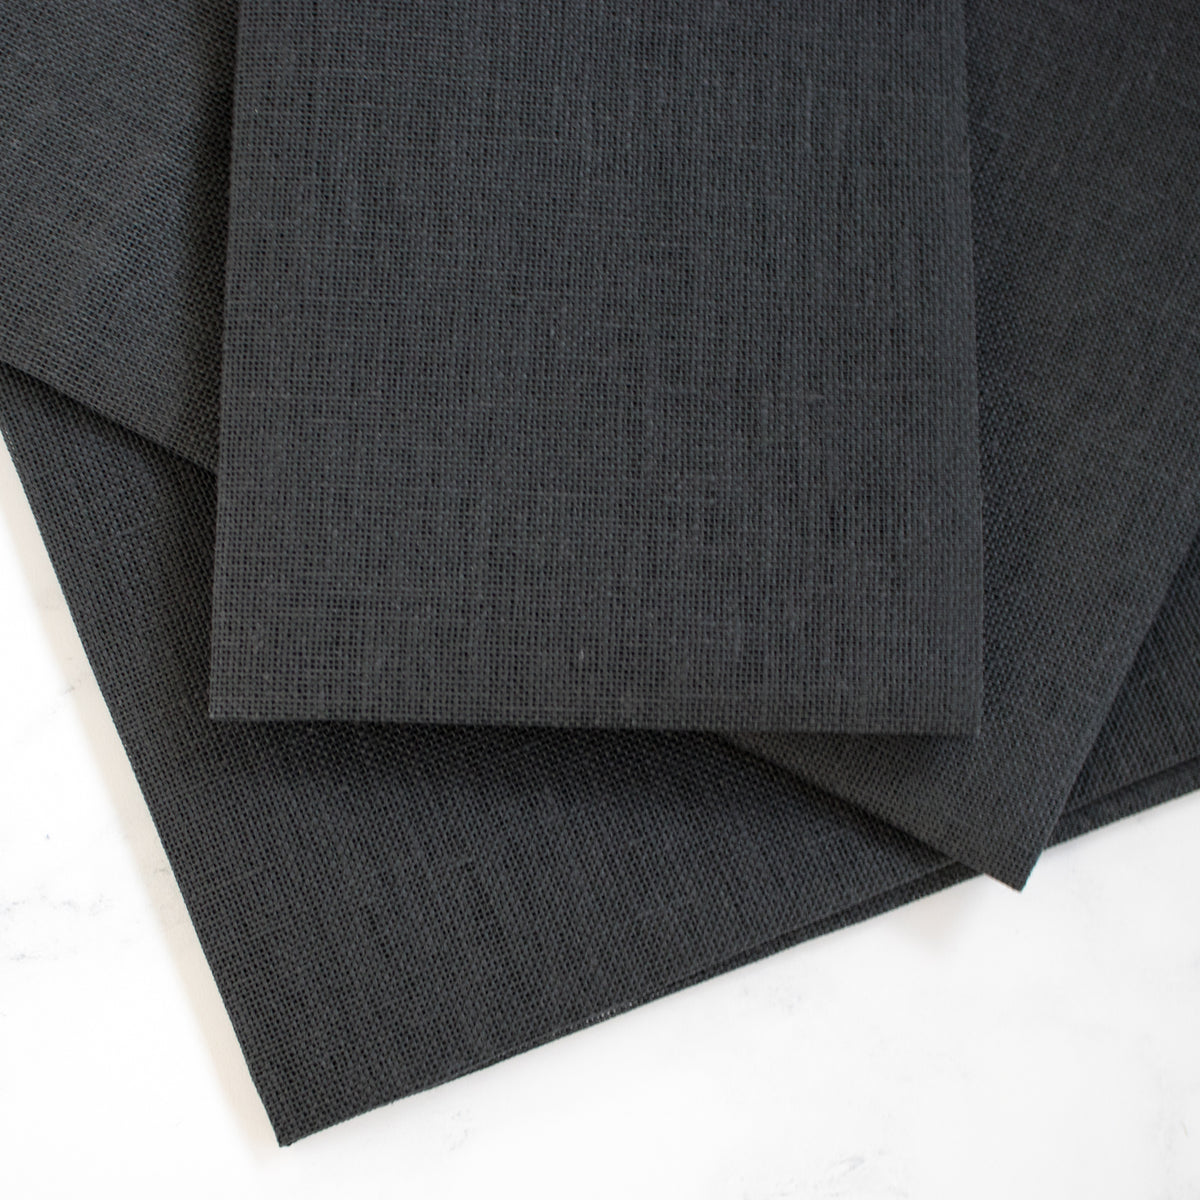 Chalkboard Black Linen Cross Stitch Fabric - 28 count